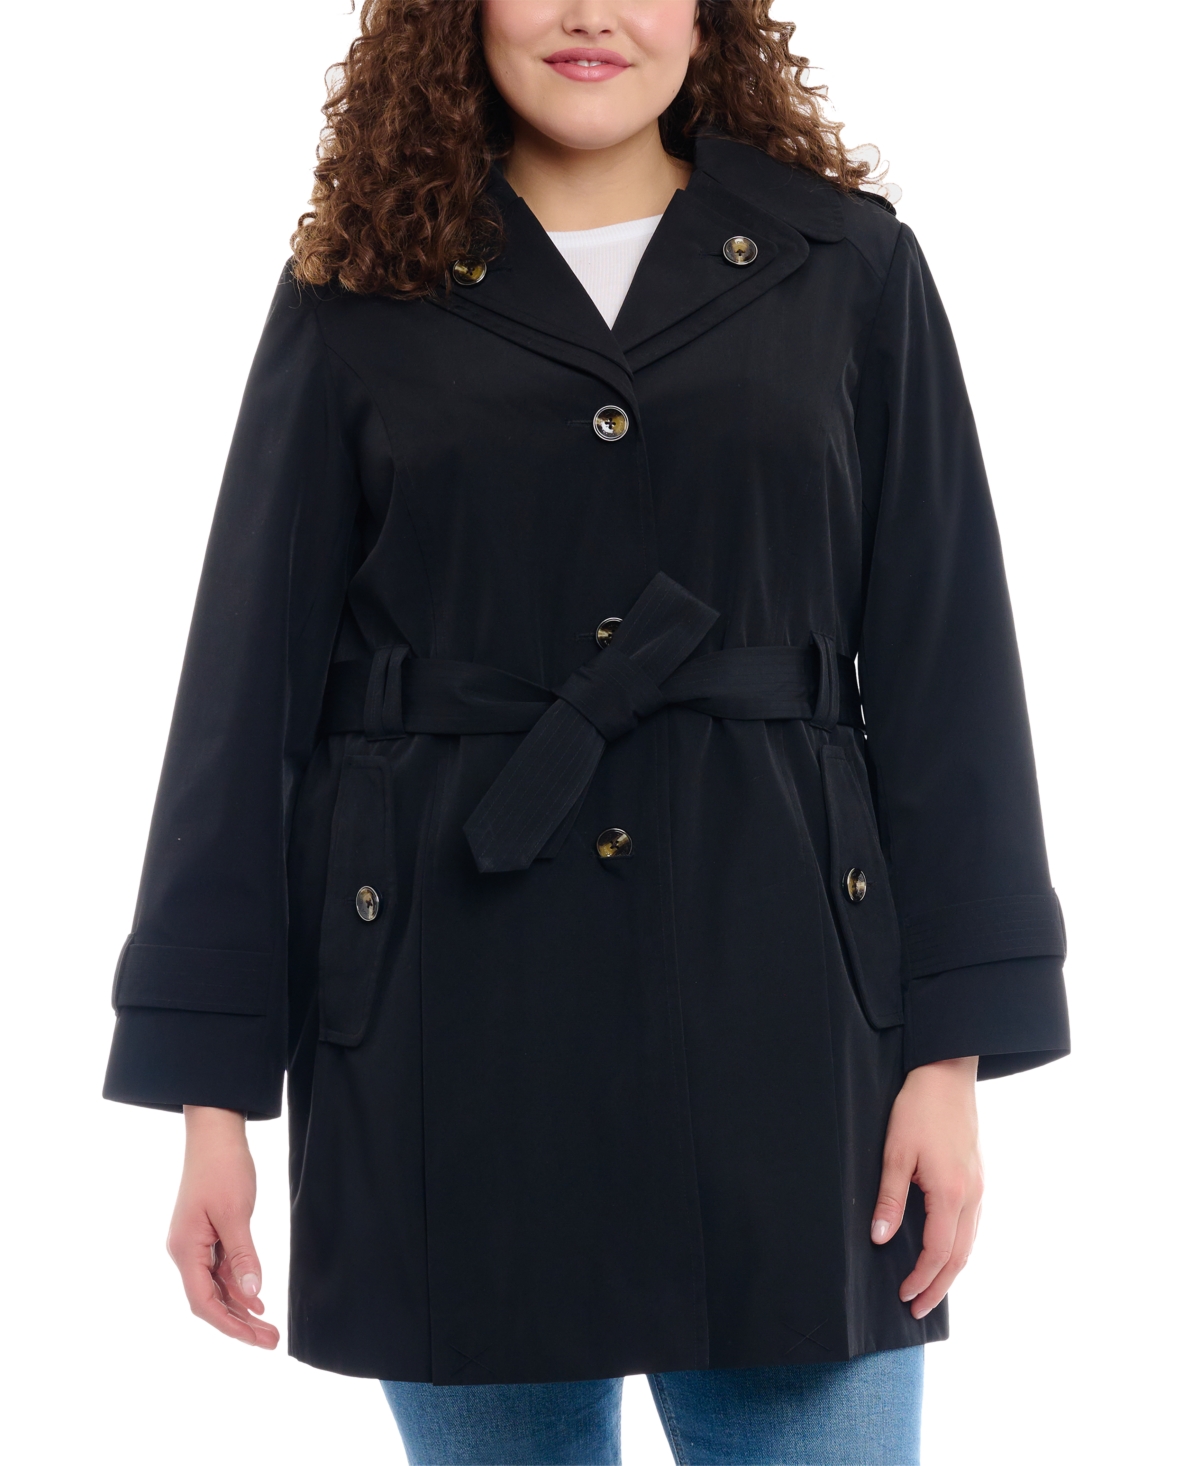 London Fog Women's Plus Size Hooded Belted Water-resistant Coat In Black